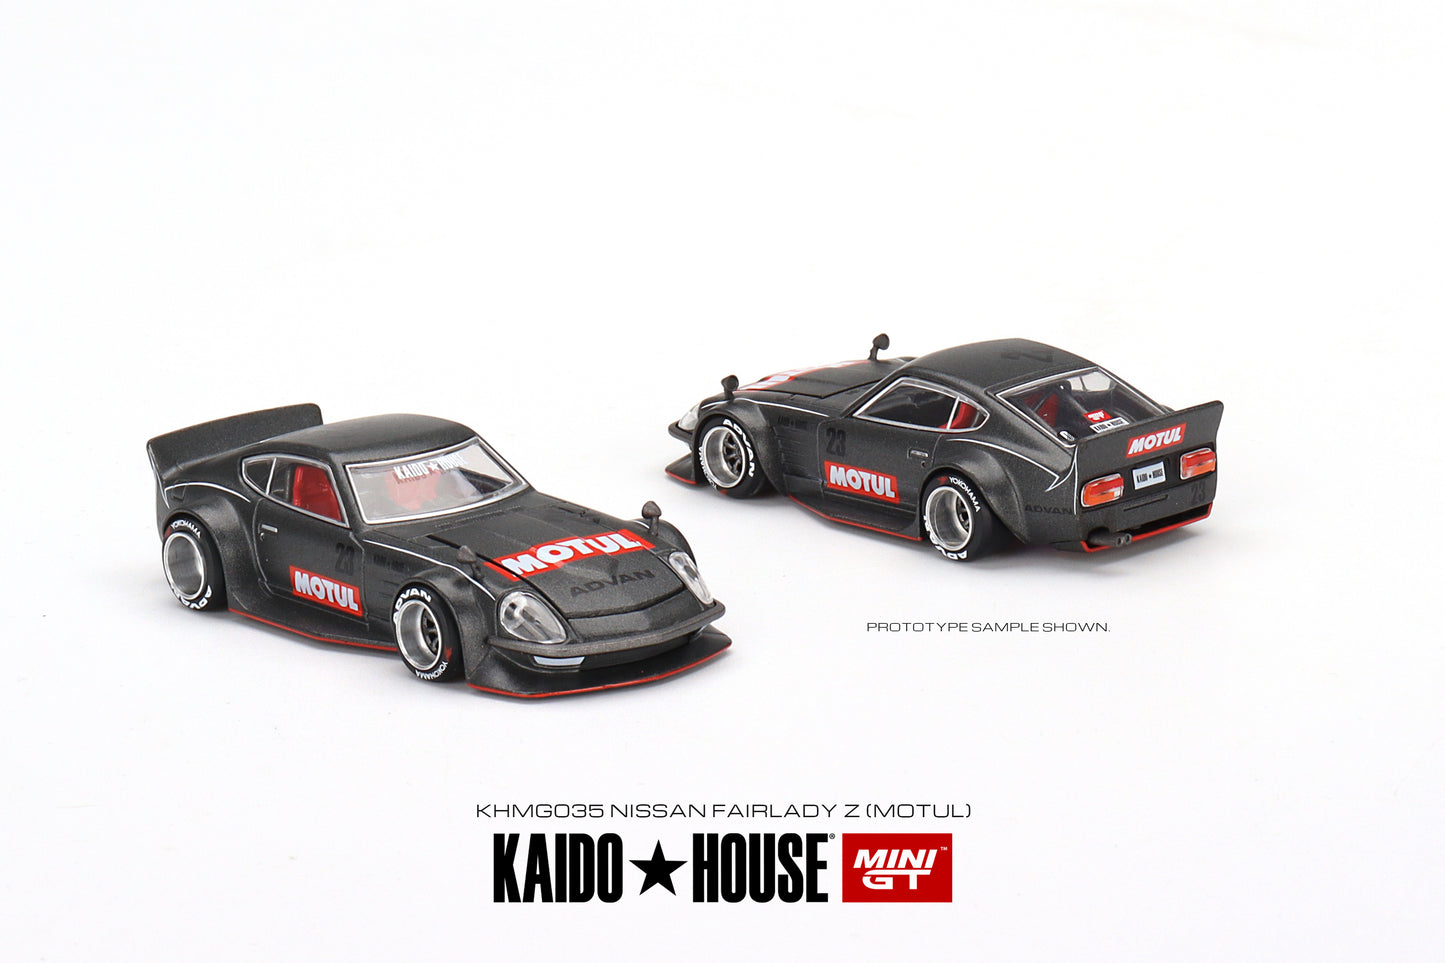 Mini GT x Kaido House 1/64 Nissan Fairlady Z Kaido GT - Motul V1